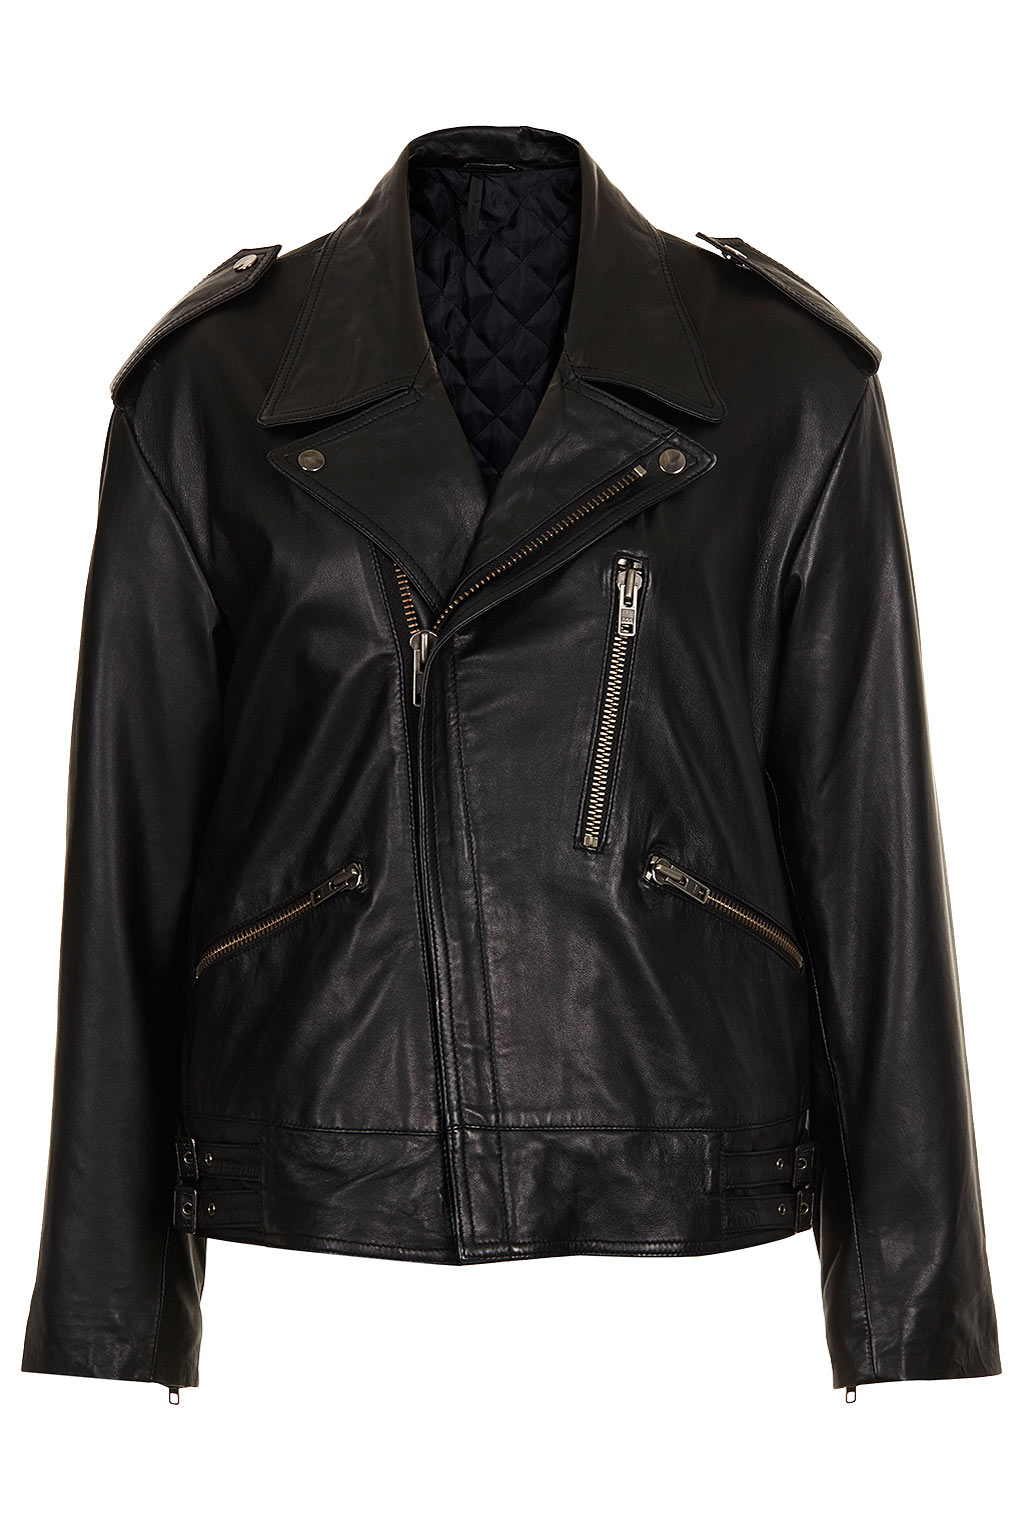 Topshop Leather Biker Jacket in Black | Lyst